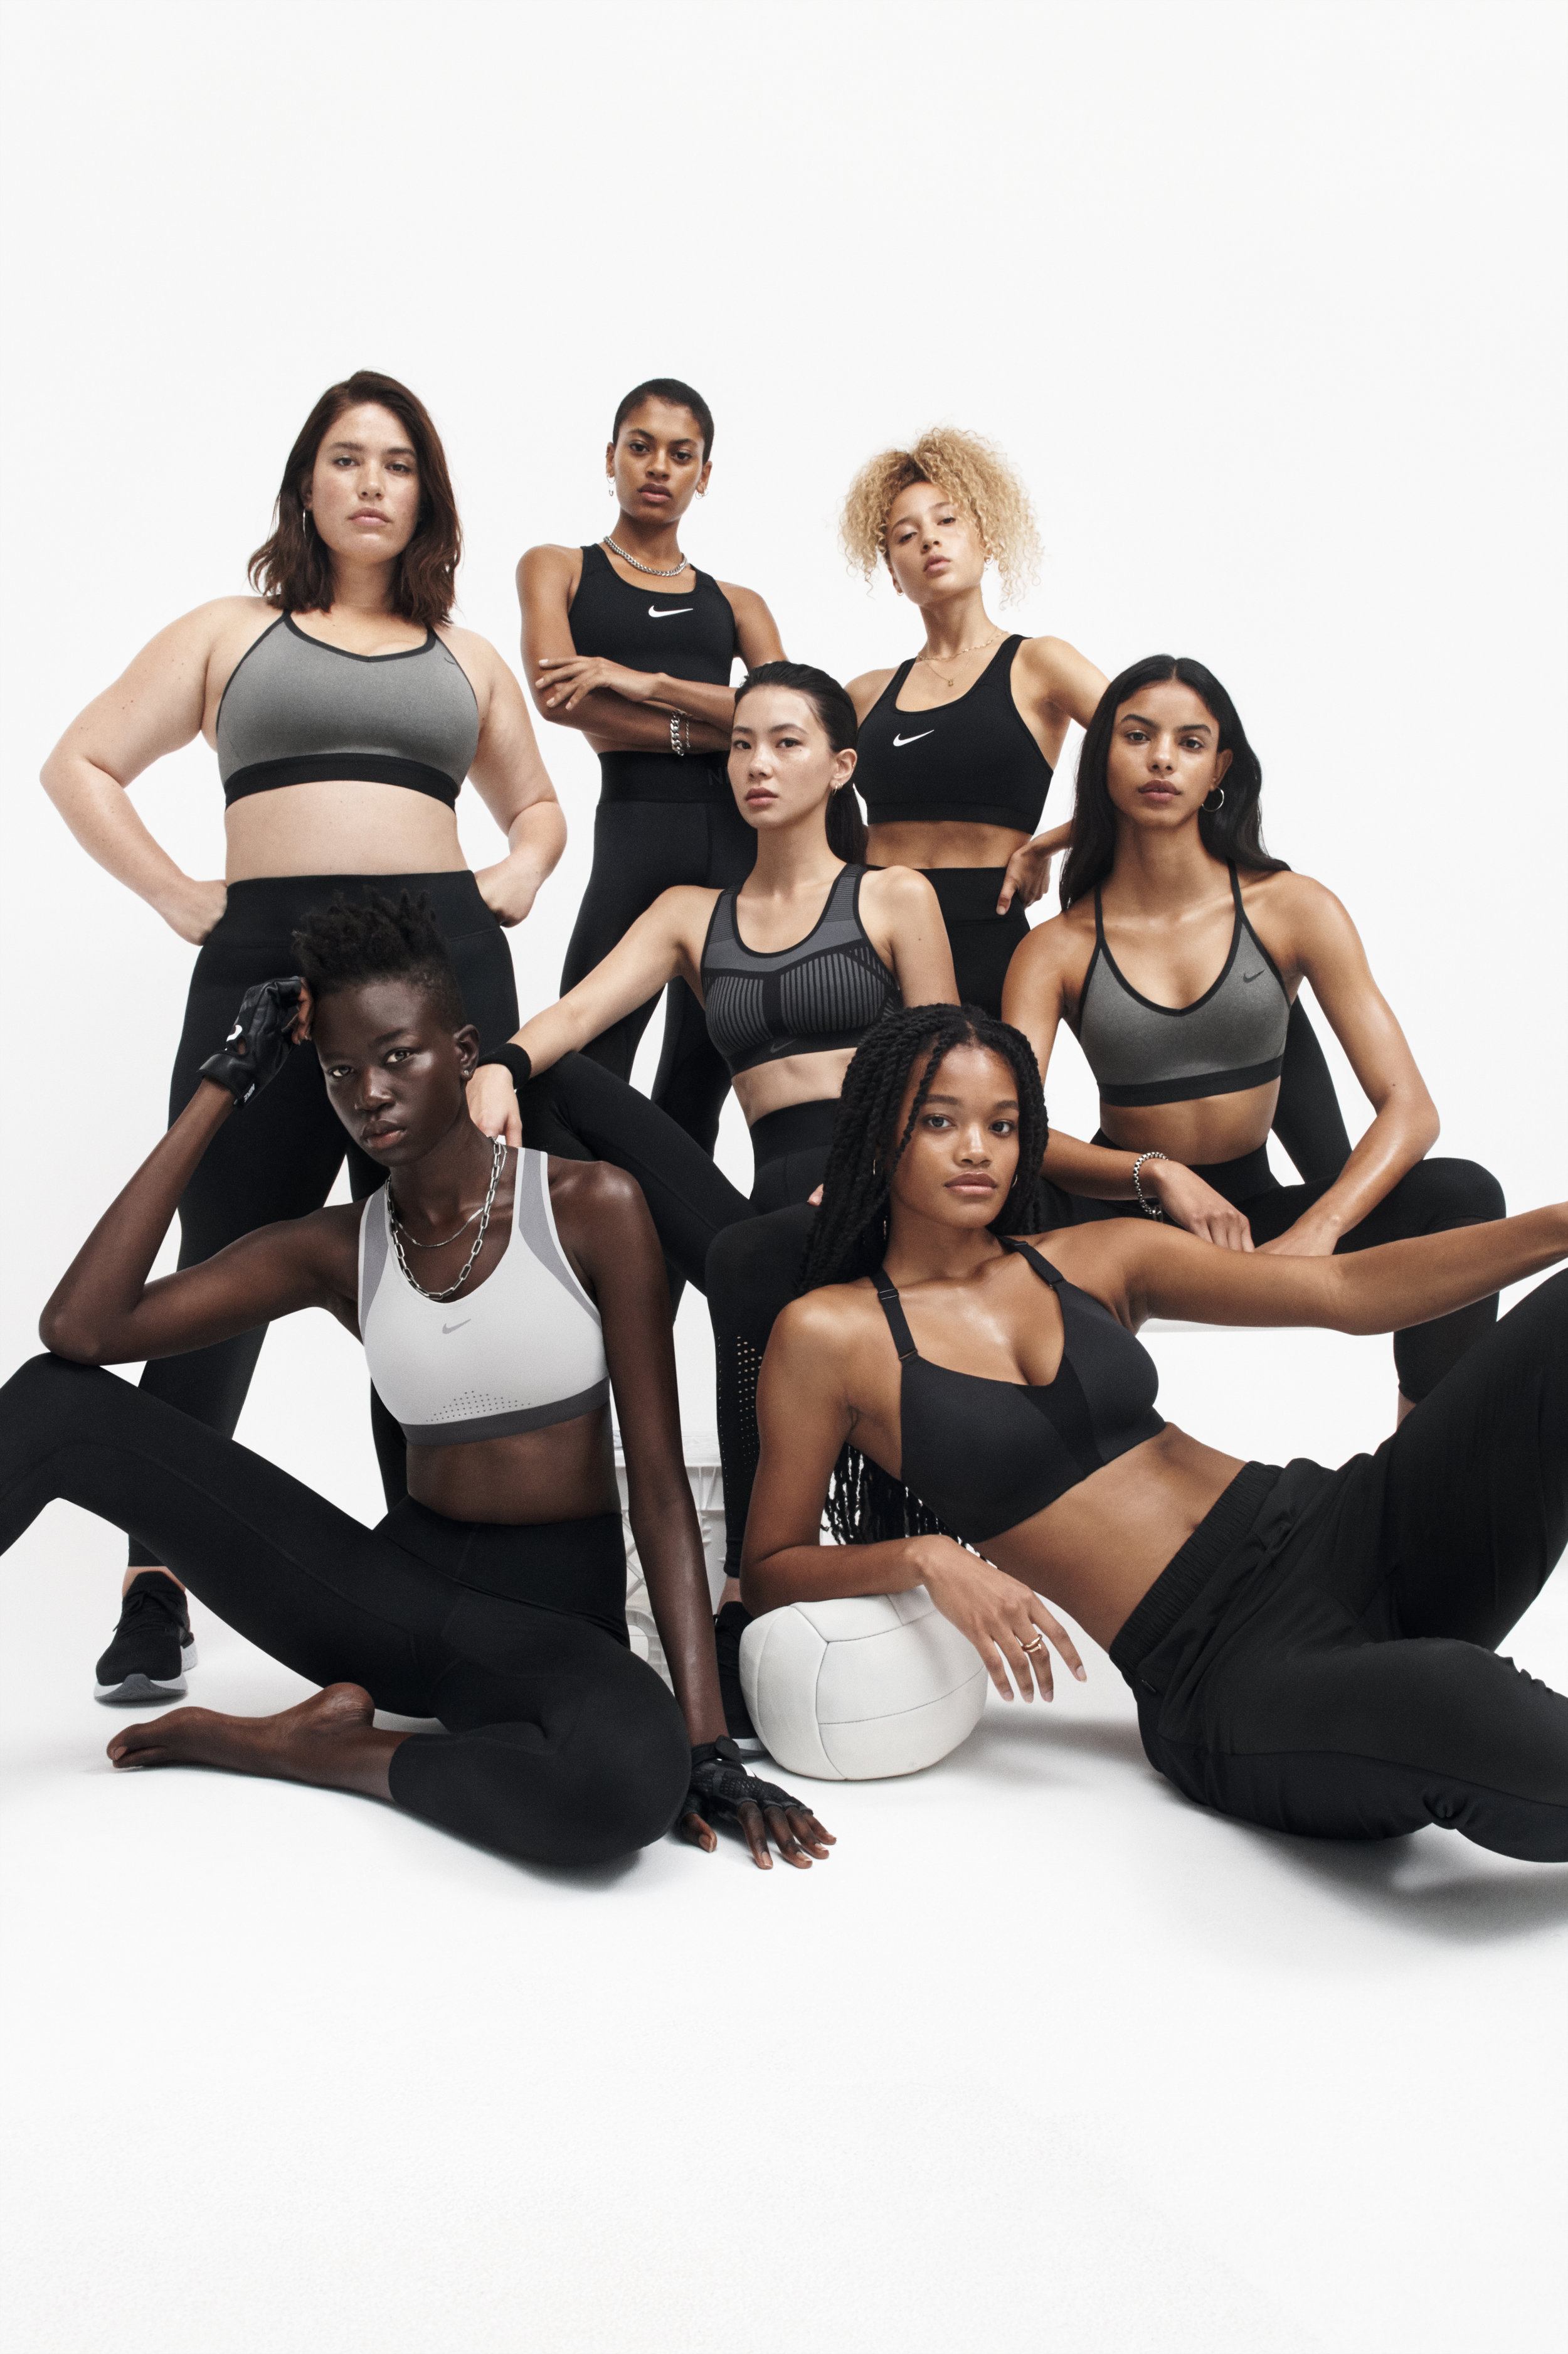 Nike Women campaign